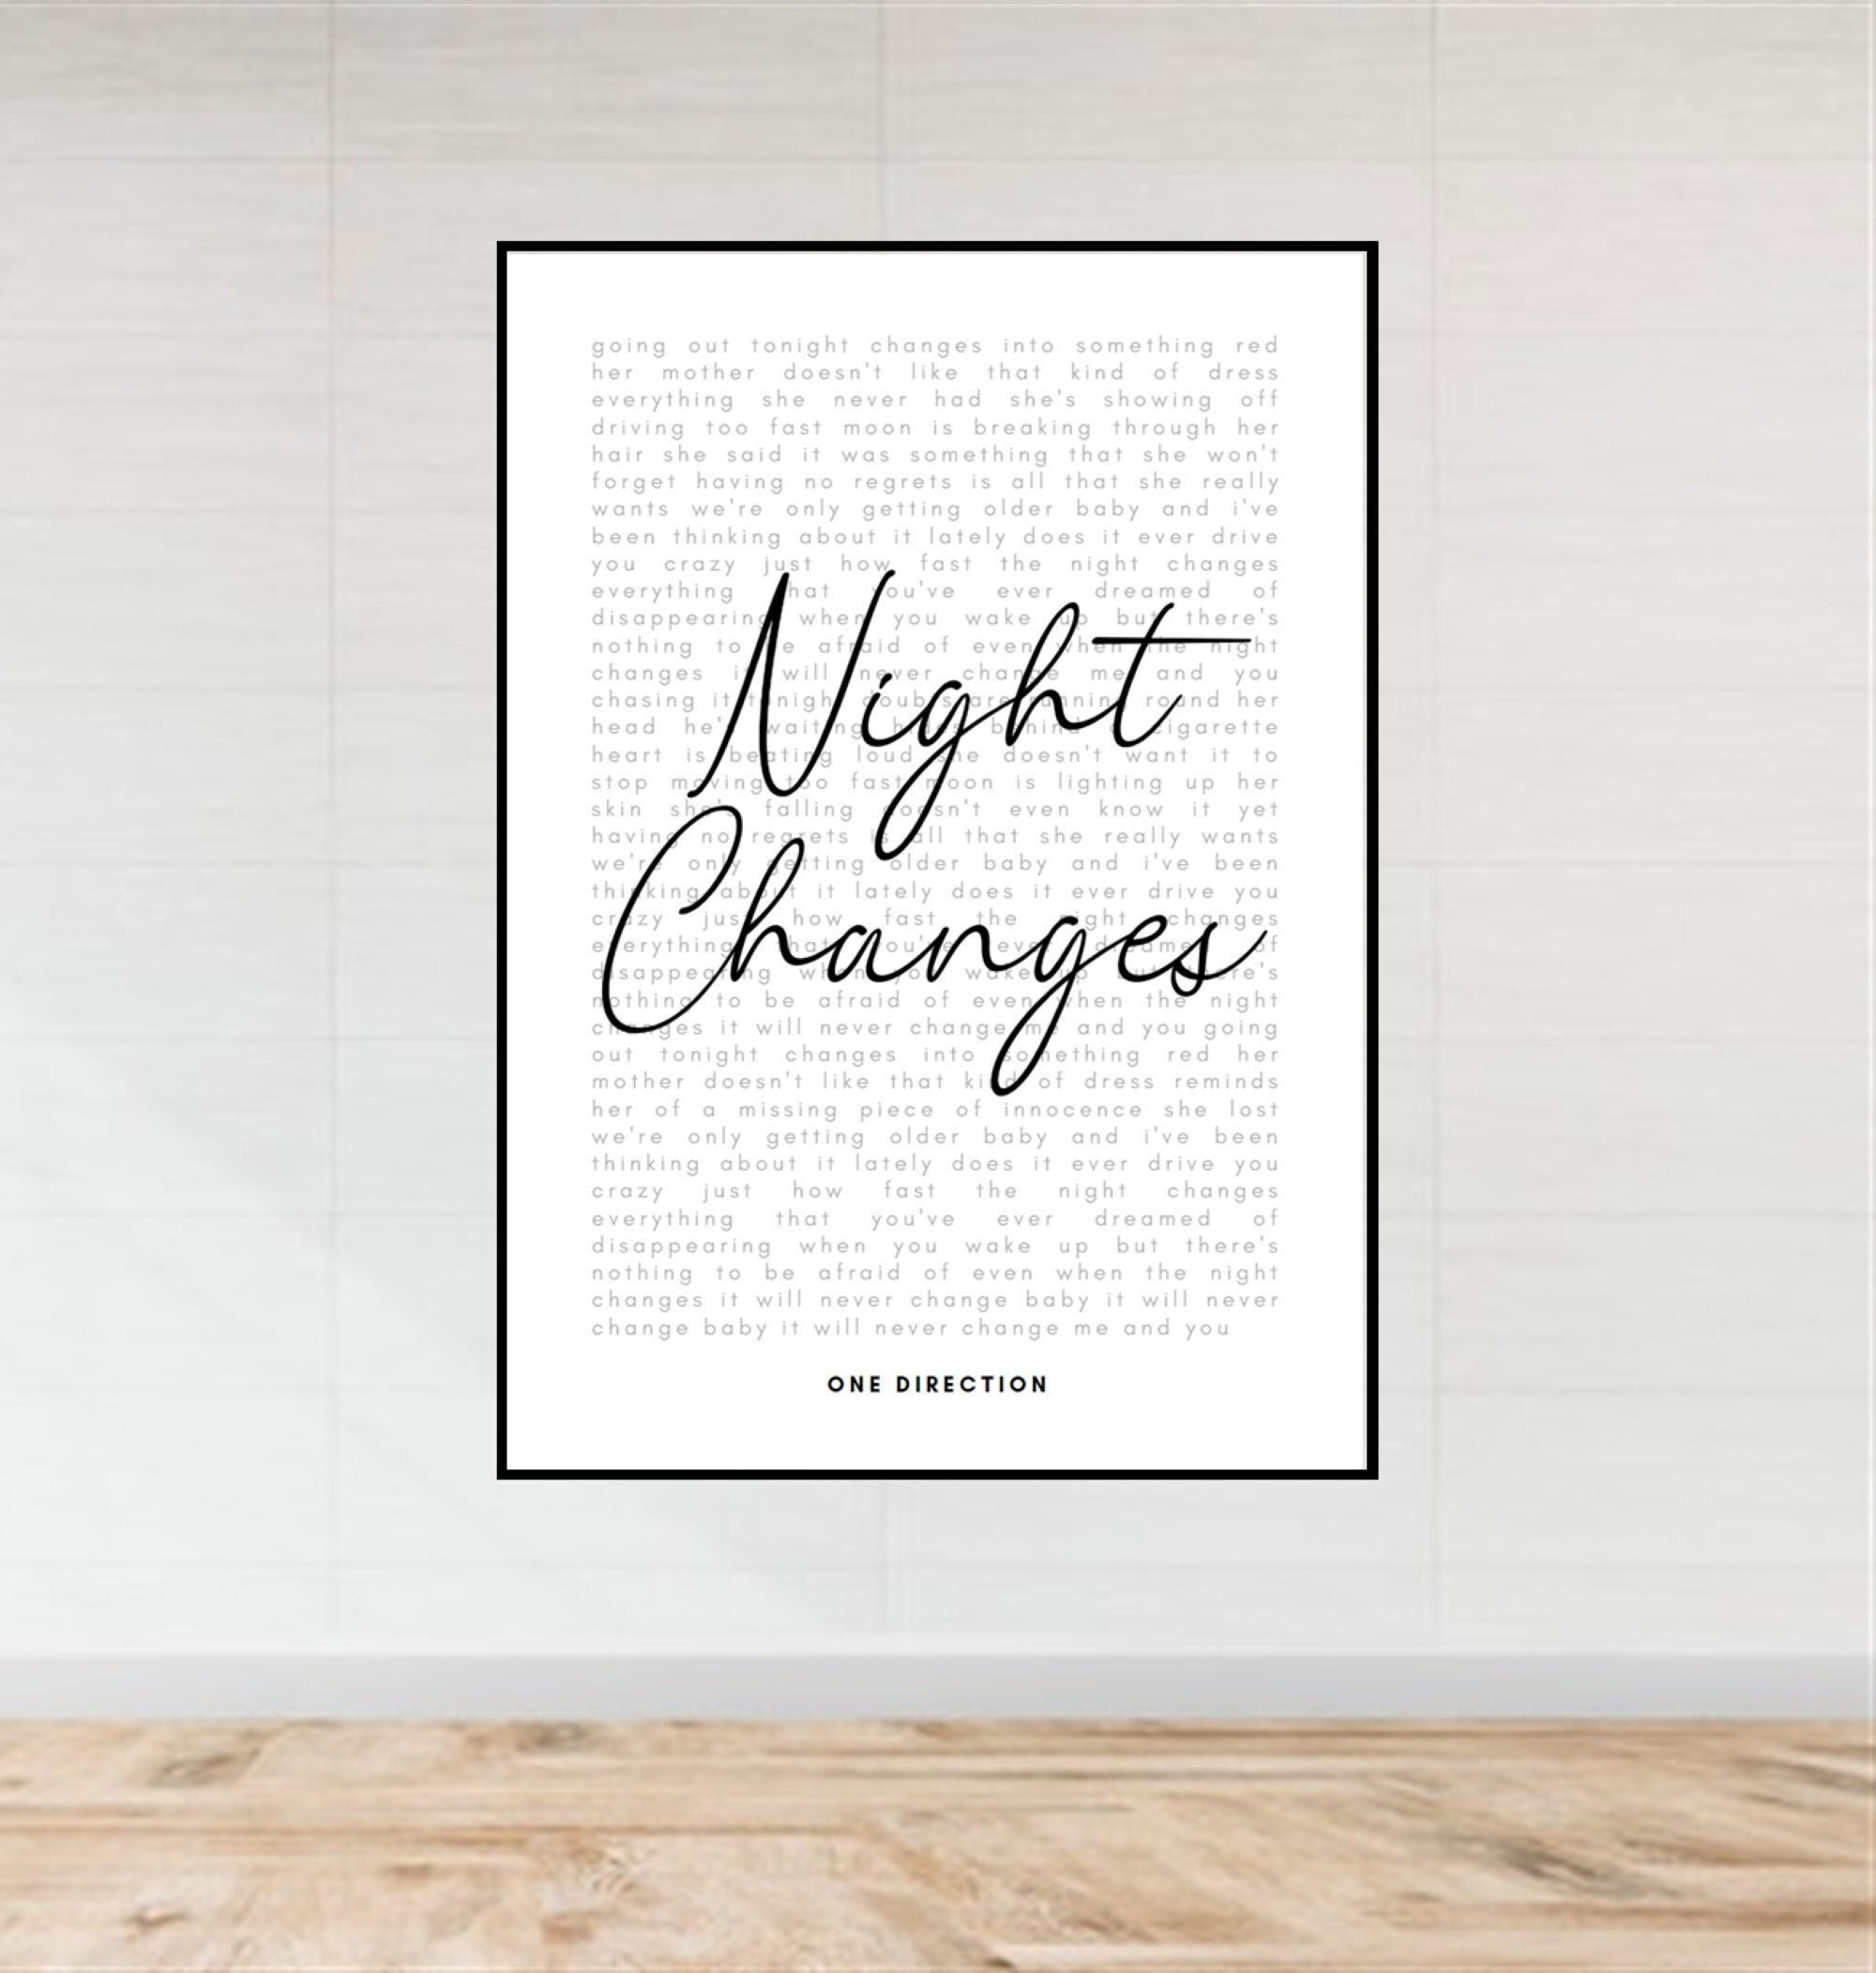 Night changes lyrics